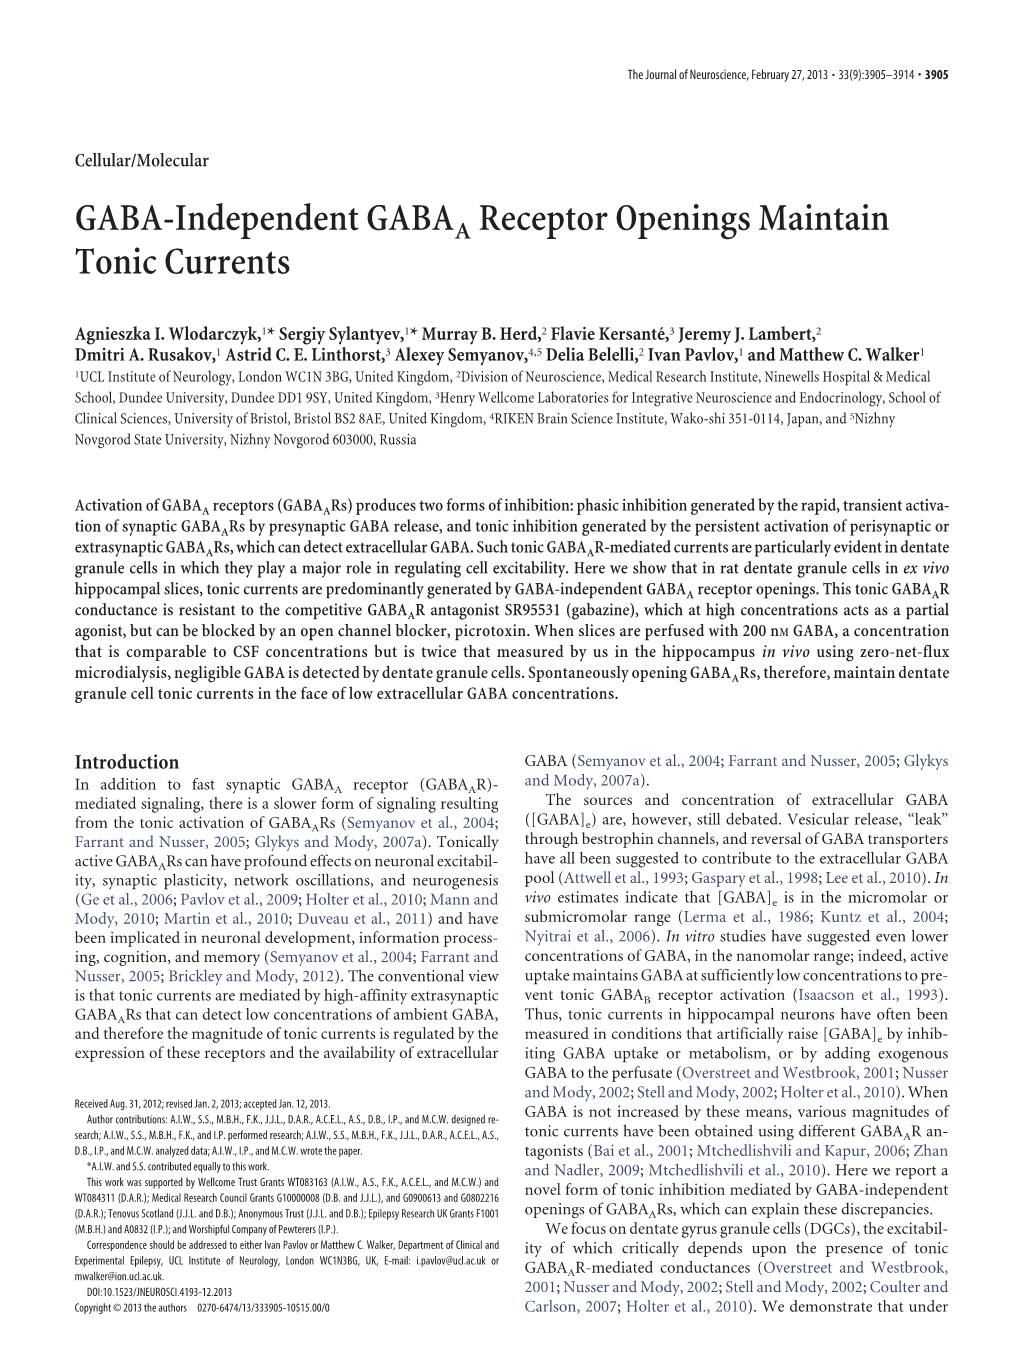 GABA-Independent GABAA Receptor Openings Maintain Tonic Currents